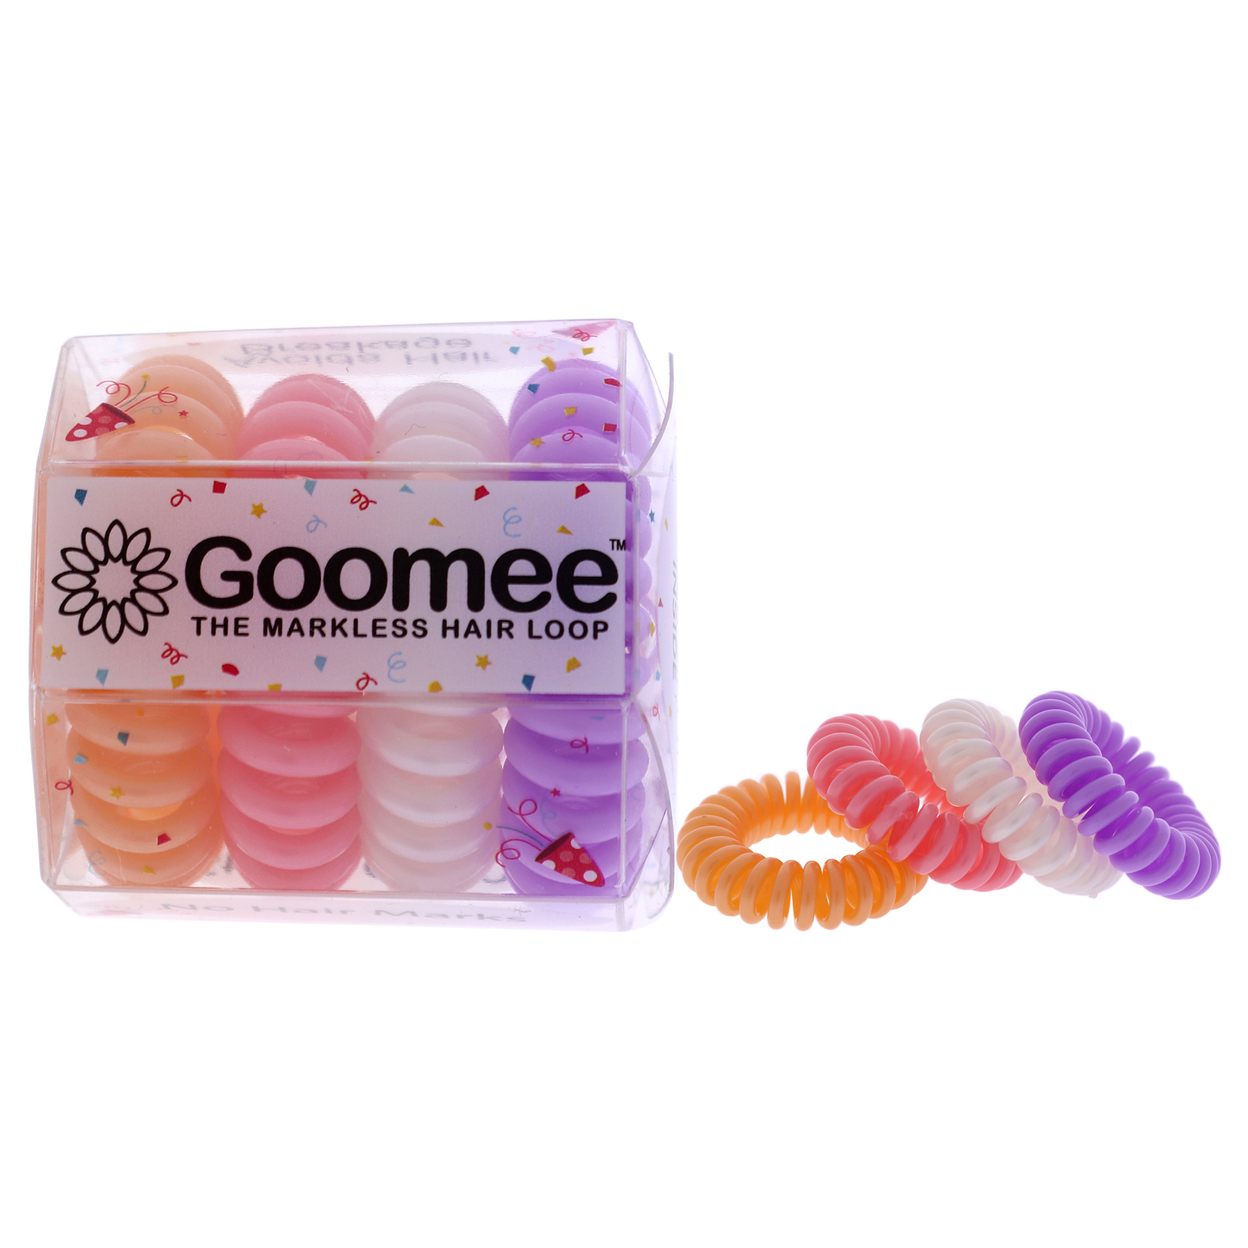 Goomee The Markless Hair Loop Set - Posh Hair Tie 4 Pc